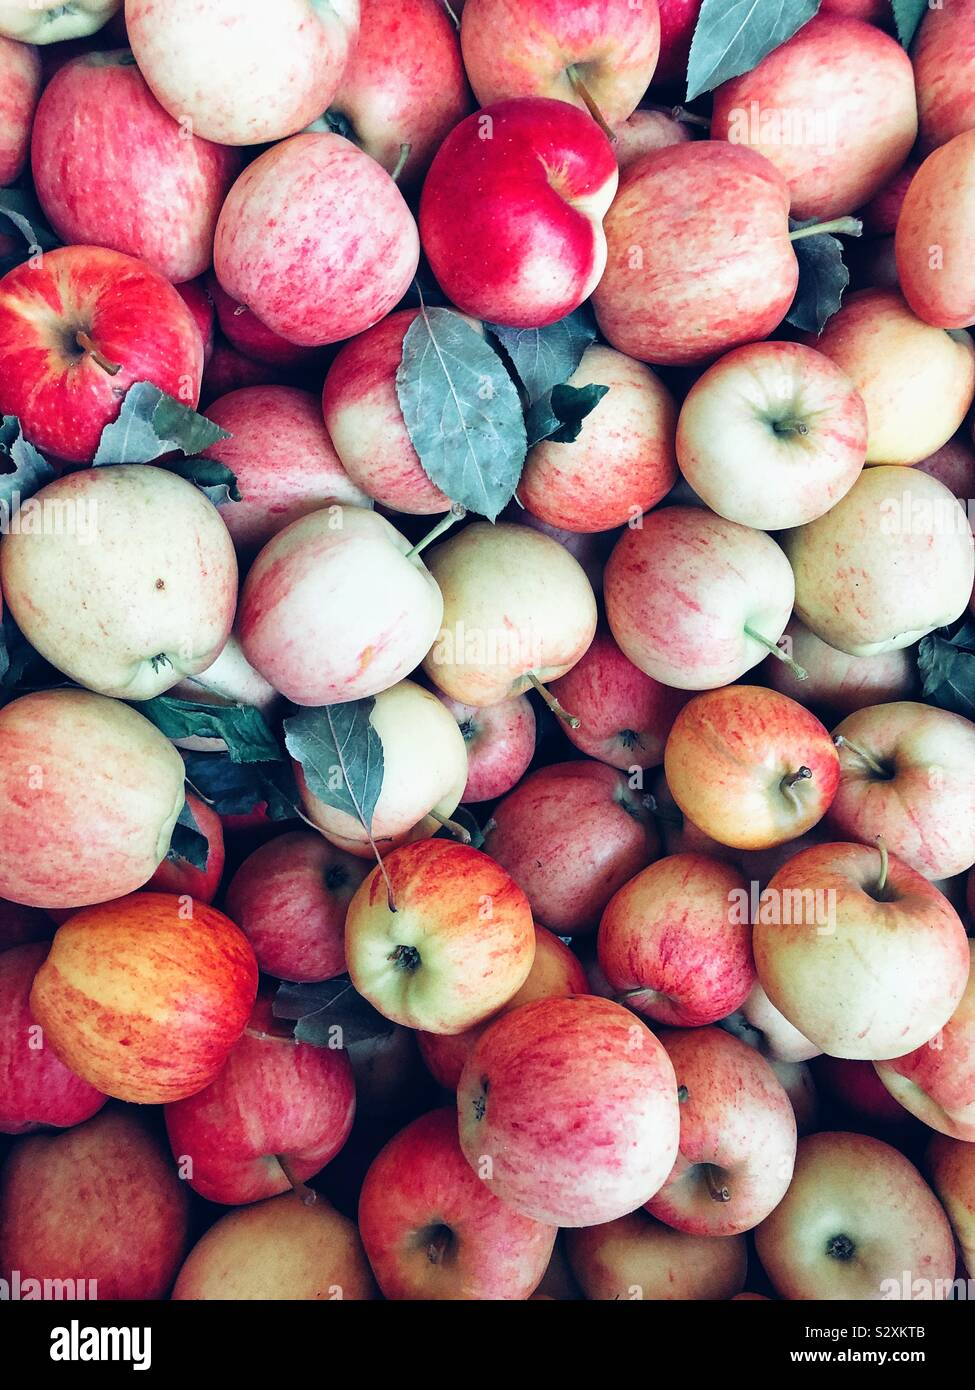 Plentiful harvest of famous Washington state Gala apples Stock Photo